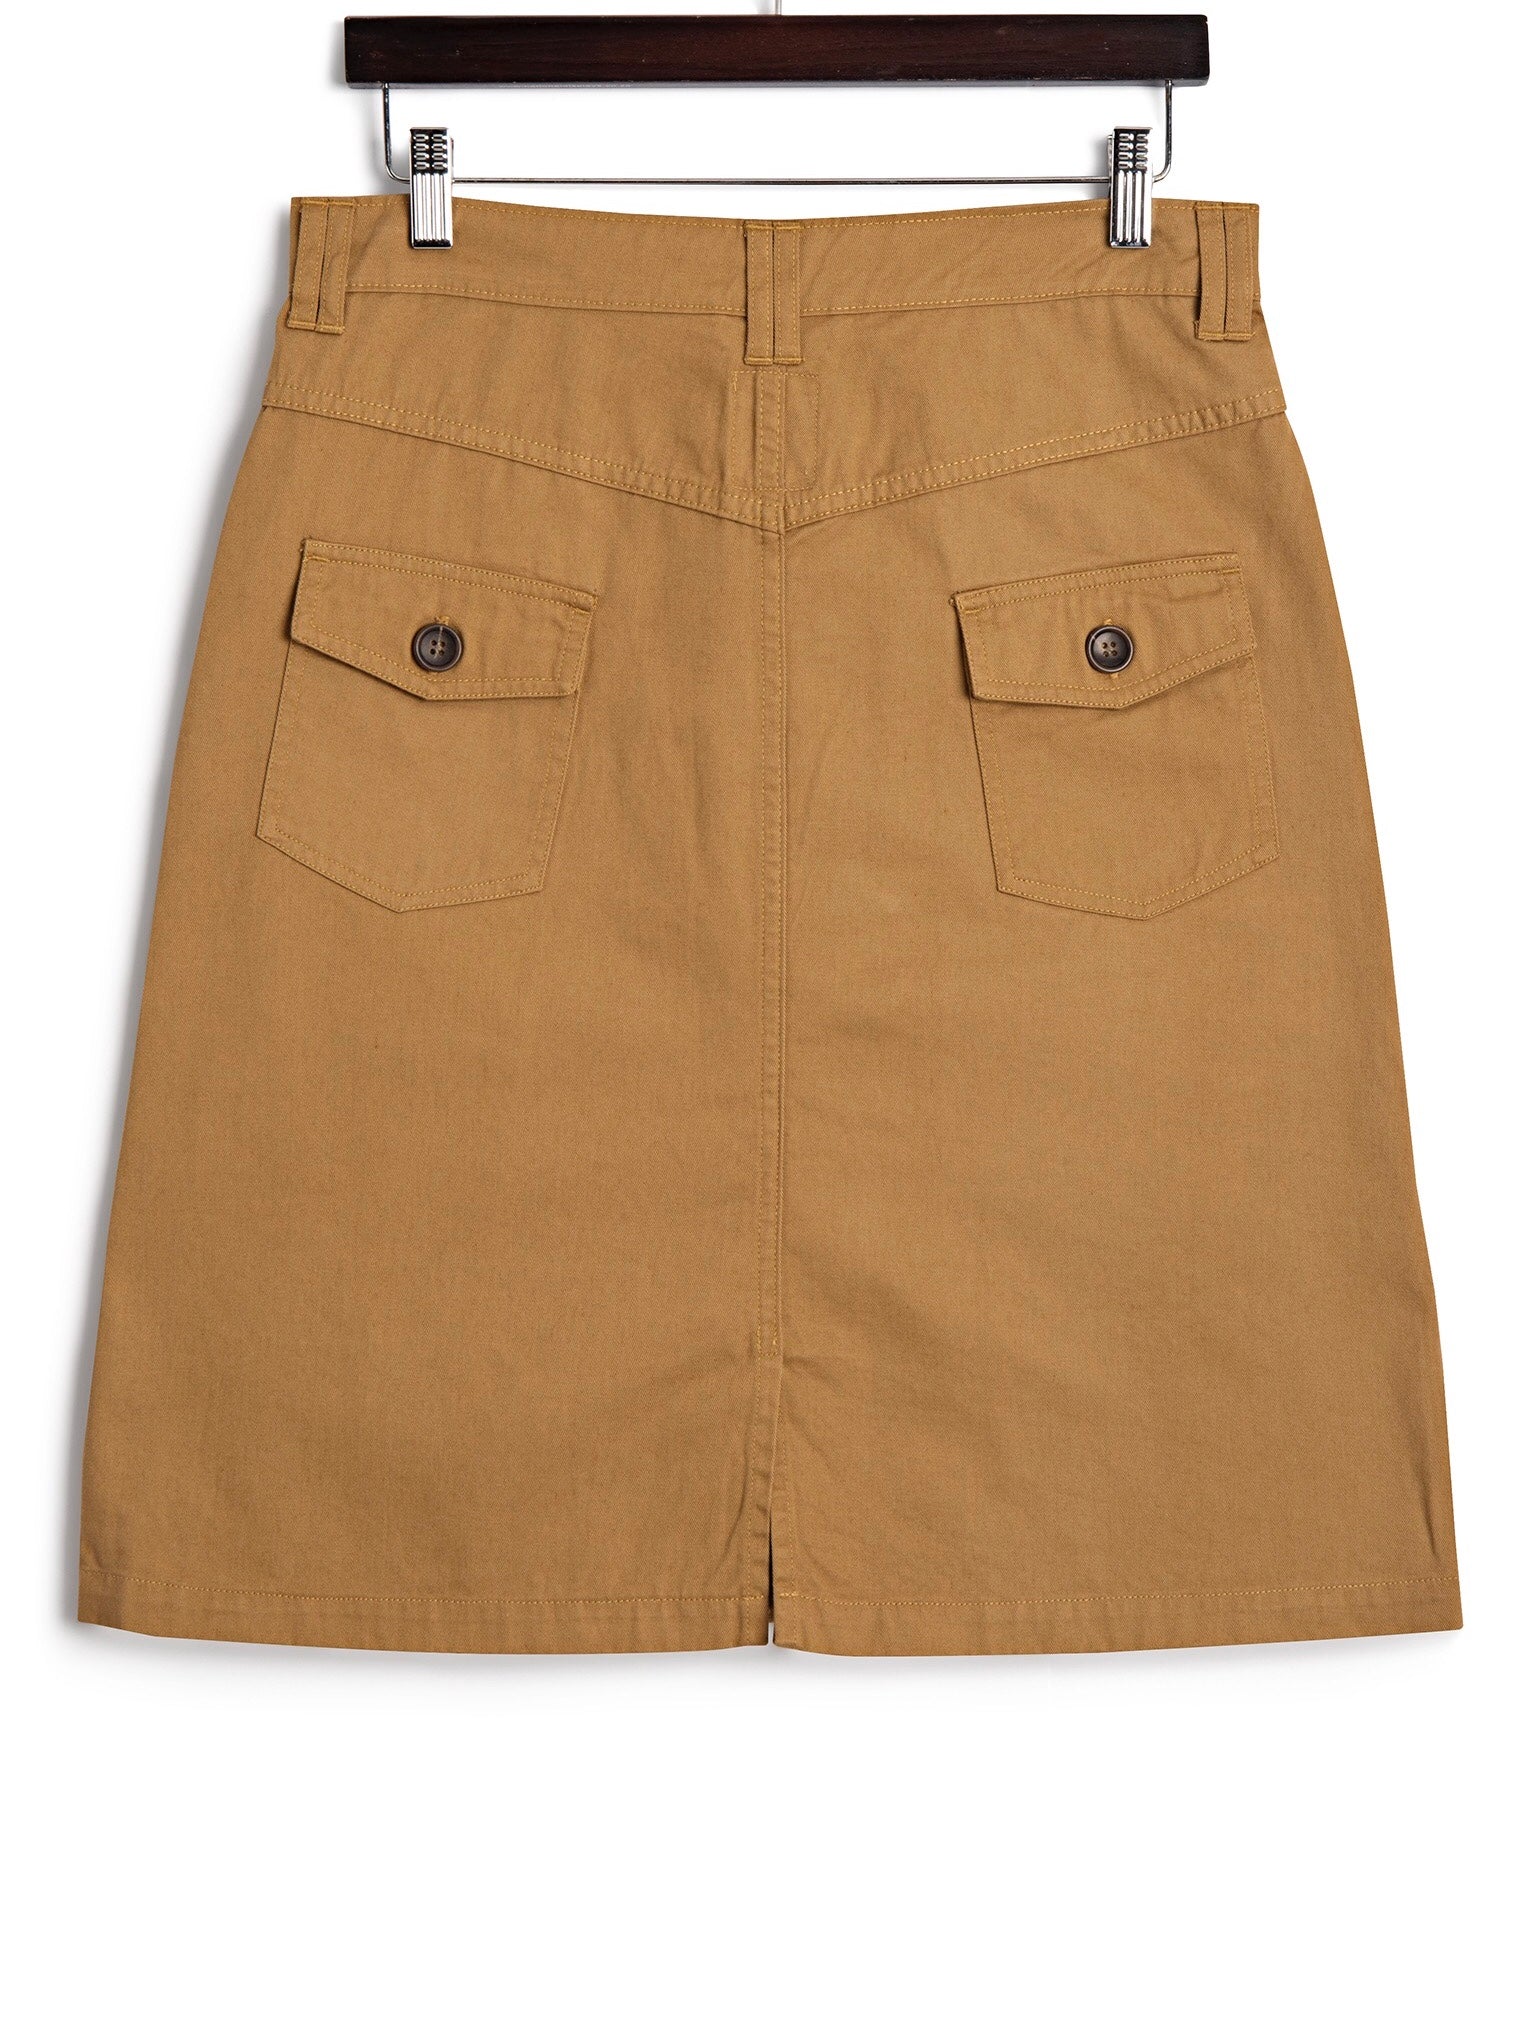 Front Pocket Skirt in Khaki Twill, Dress, Hickman & Bousfield - Hickman & Bousfield, Safari and Travel Clothing